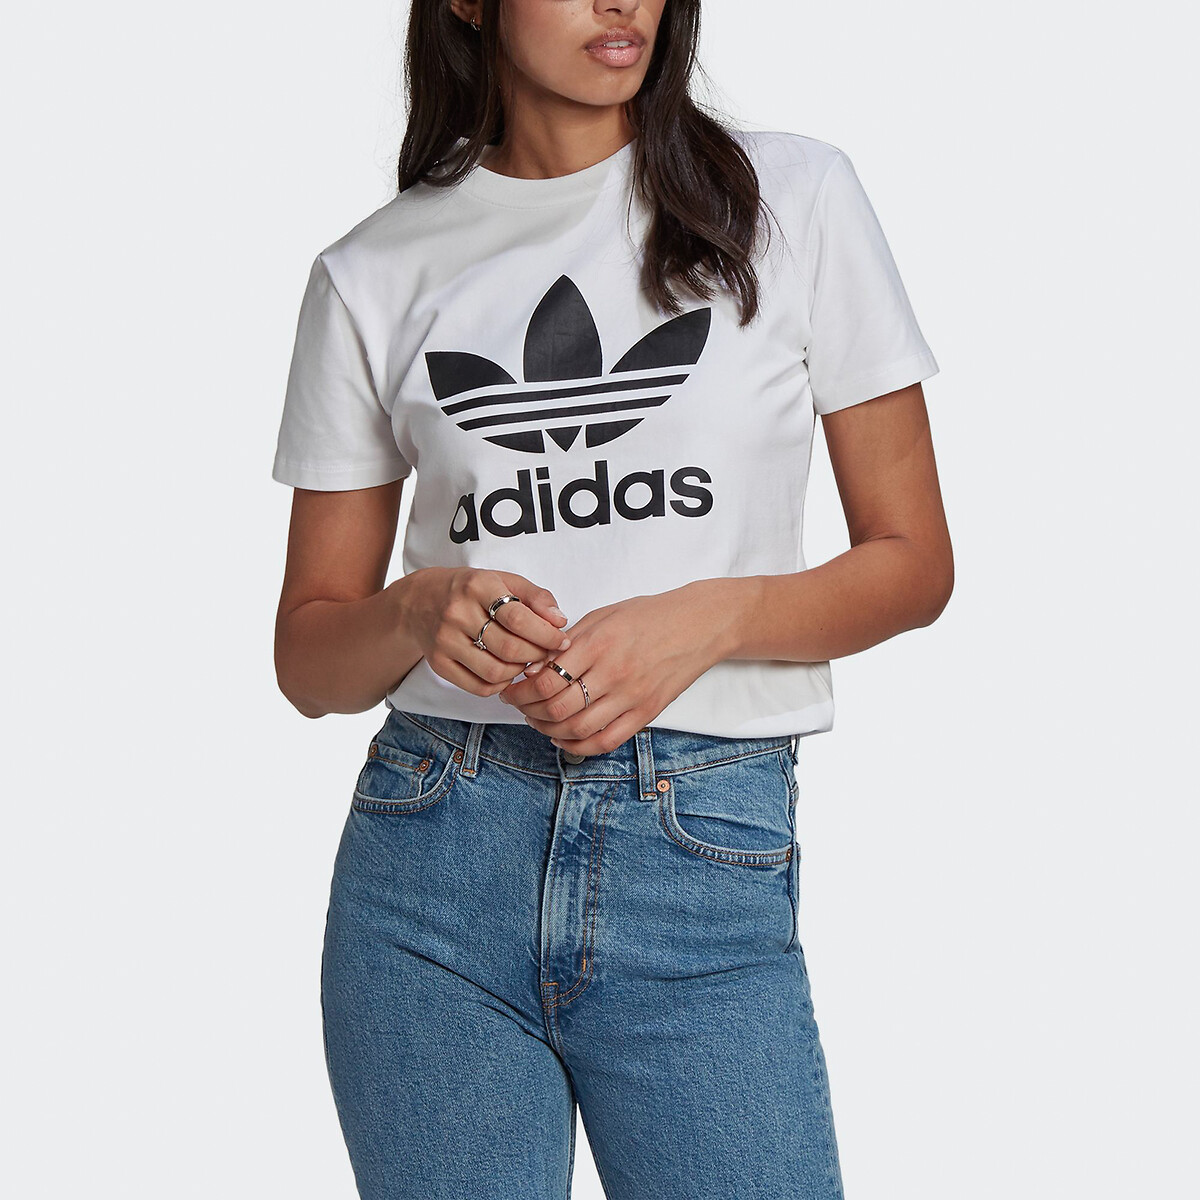 جرة مزخرفة Tee-shirt Adidas femme | La Redoute جرة مزخرفة